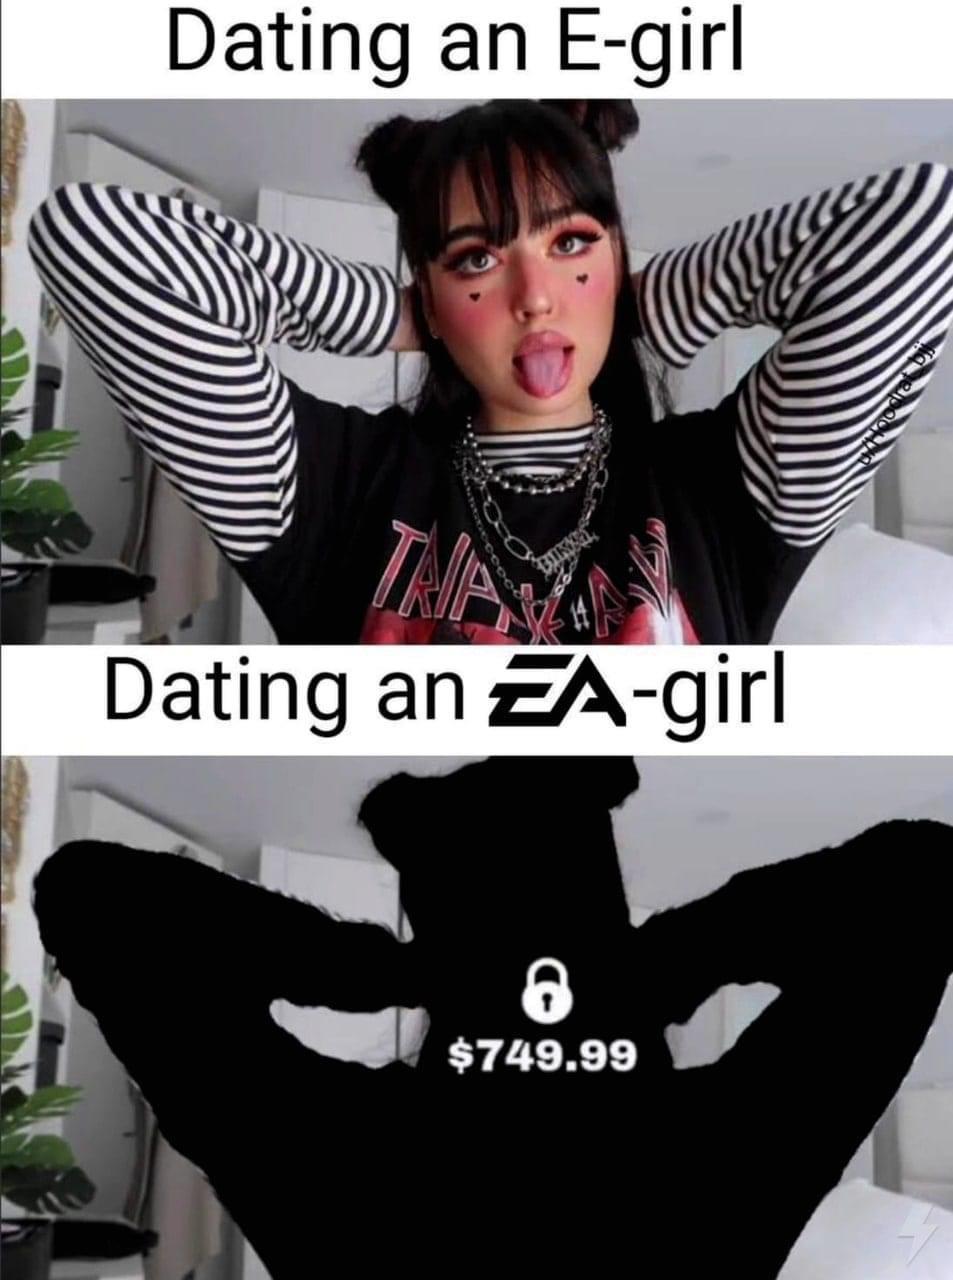 e girl vs ea girl meme - Dating an Egirl Tra Dating an Eagirl O $749.99